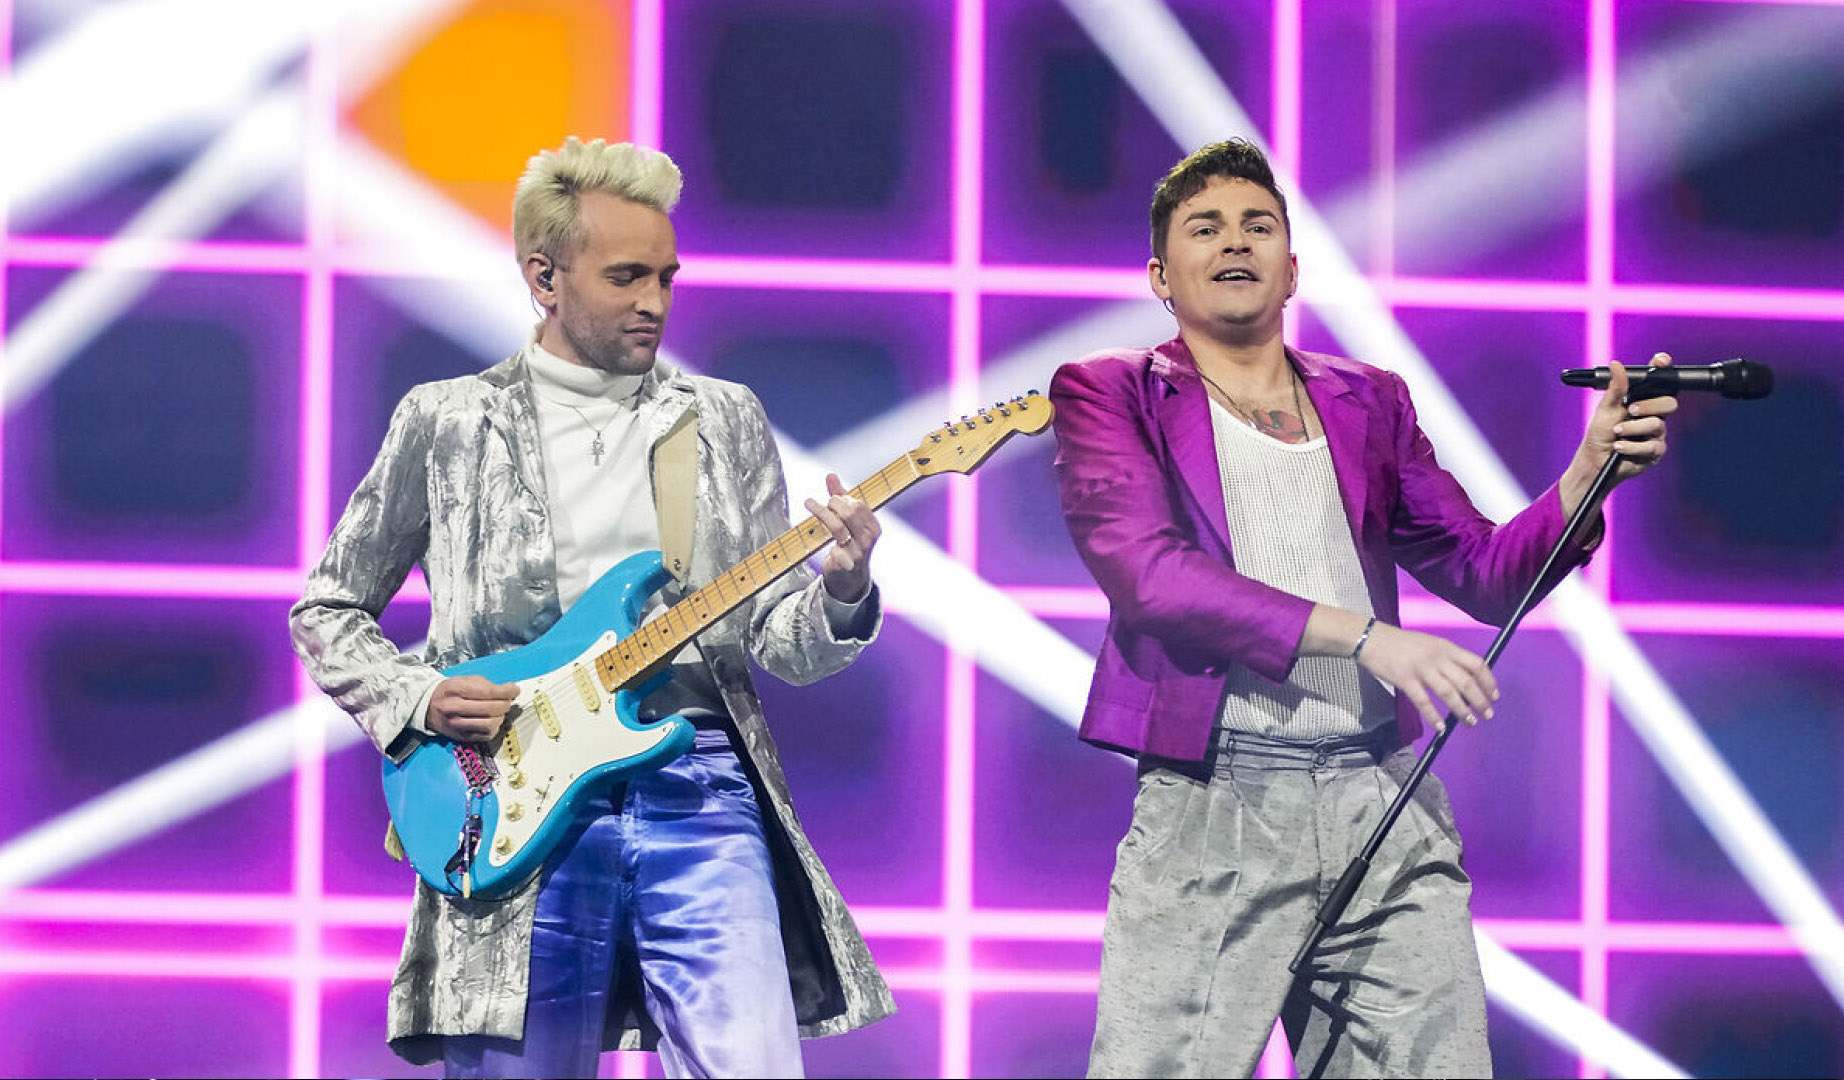 Fyr & Flamme to compete for Denmark at Eurovision 2021 with ‘Øve os på hinanden’